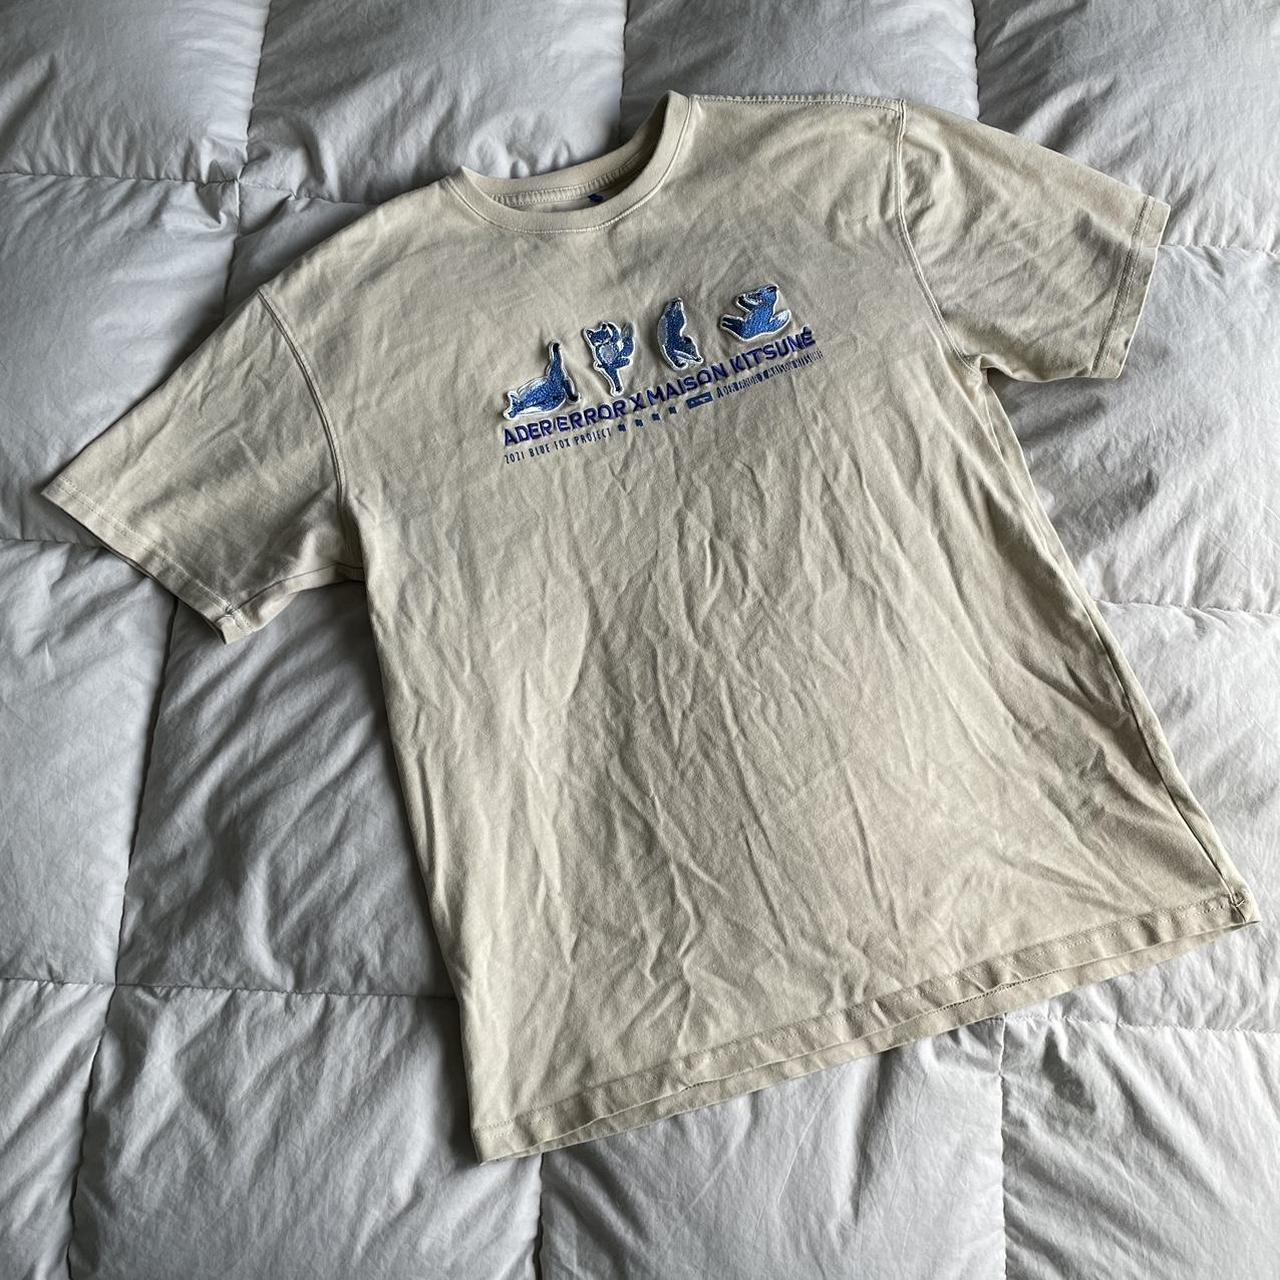 Ader Error Men's Cream and Blue Shirt (2)